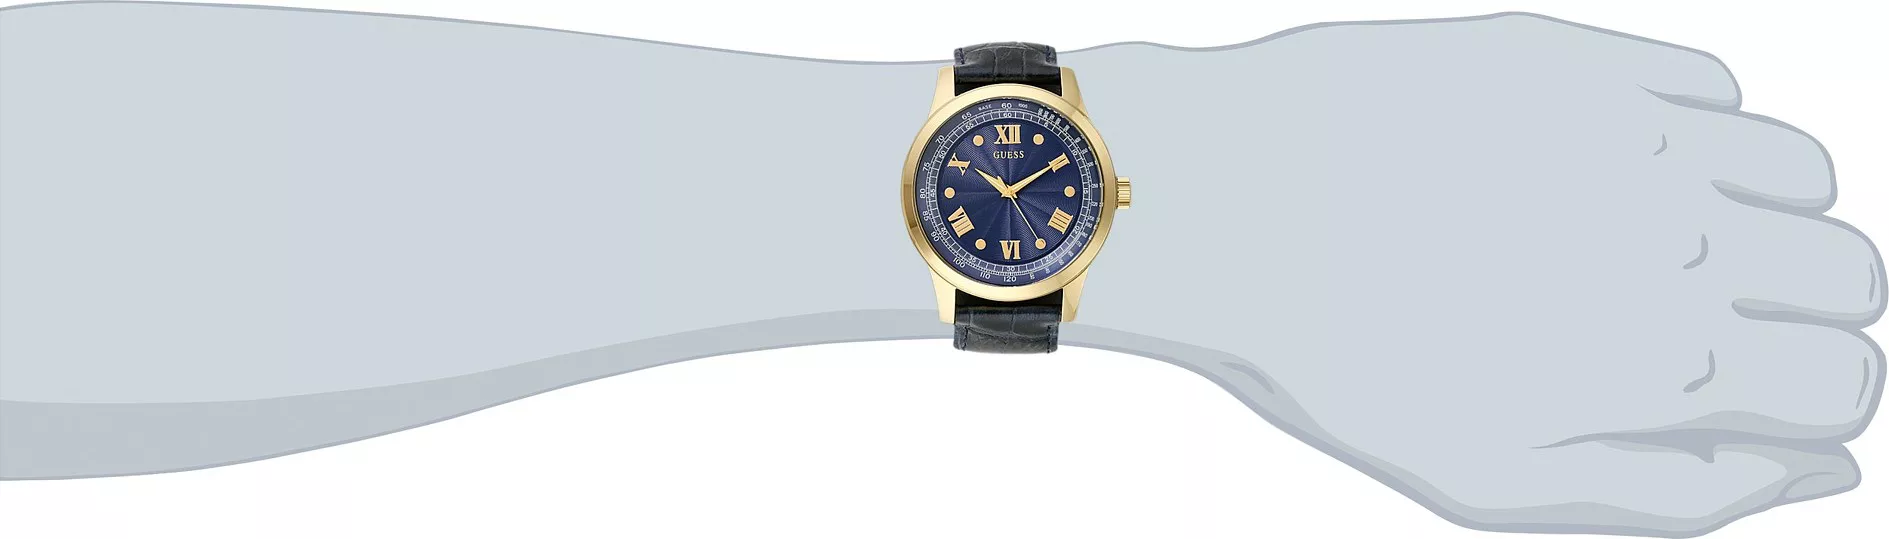 GUESS Men's Blue & Gold-Tone Watch 44mm